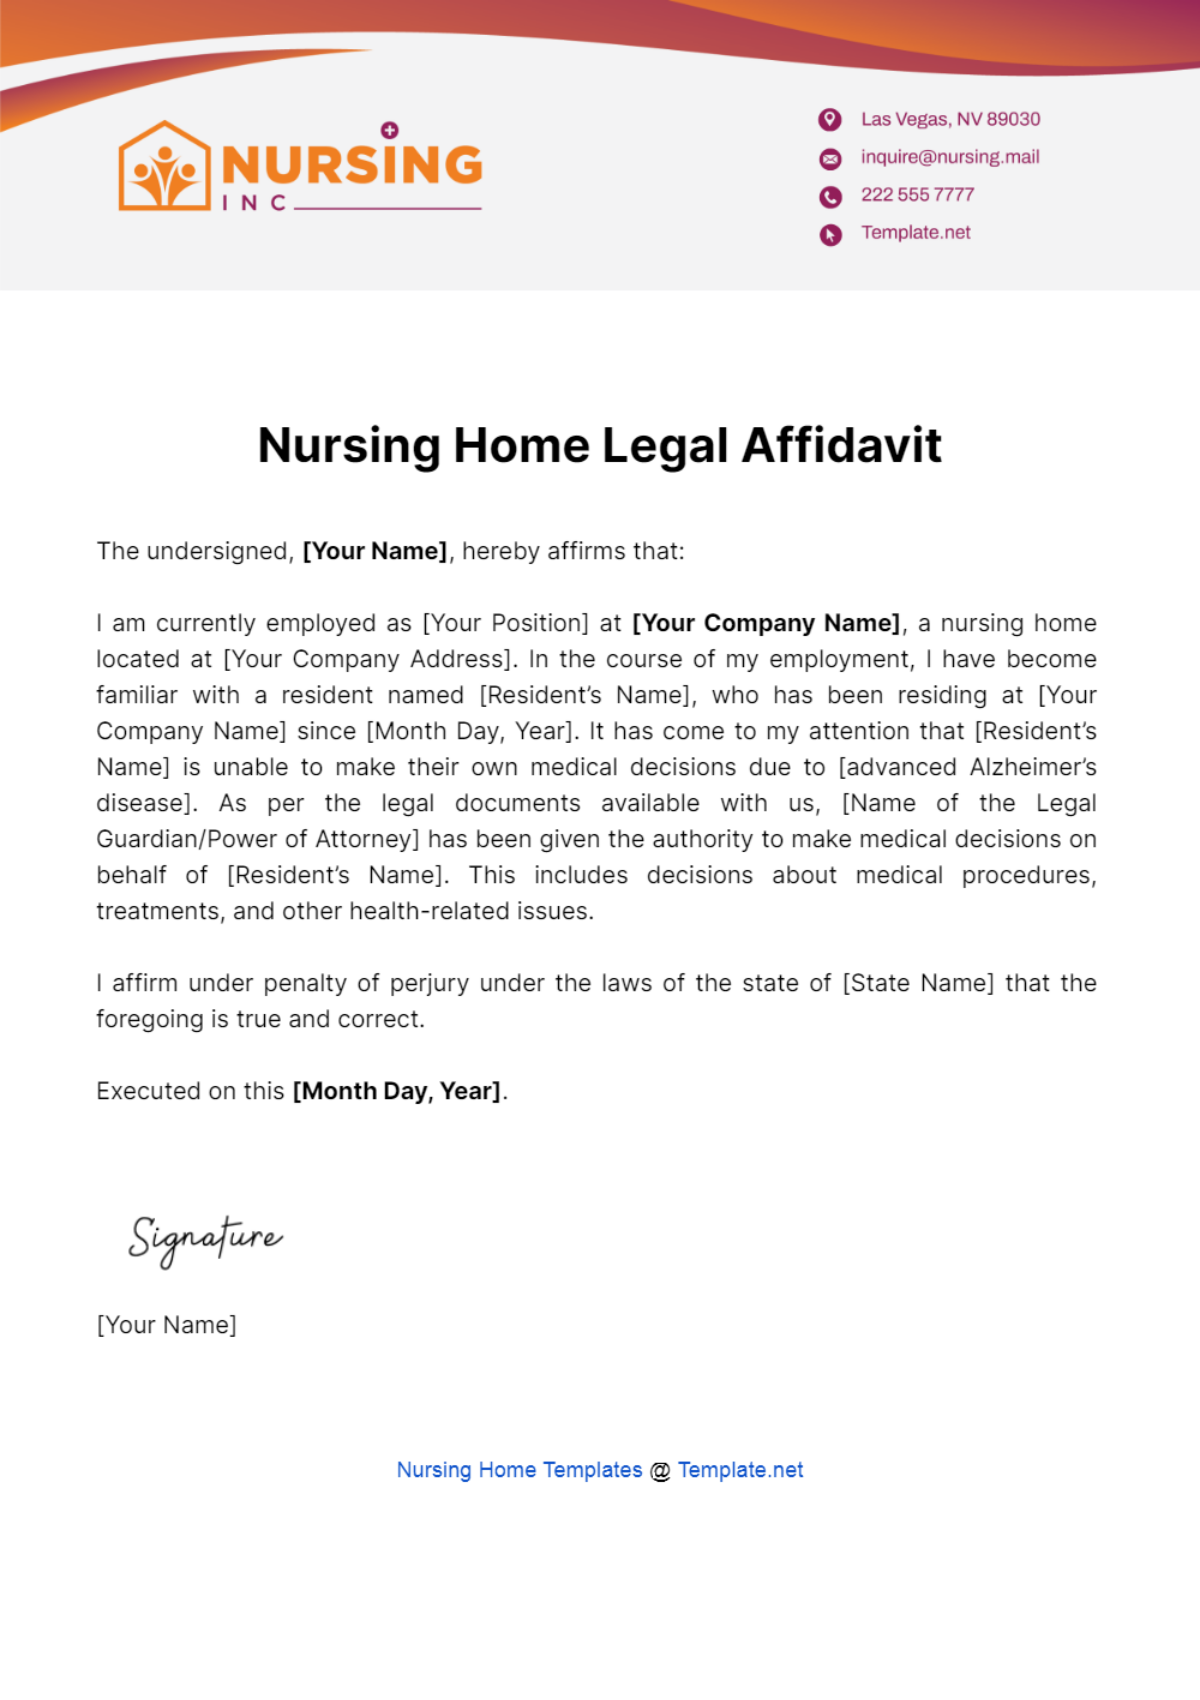 Nursing Home Legal Affidavit Template